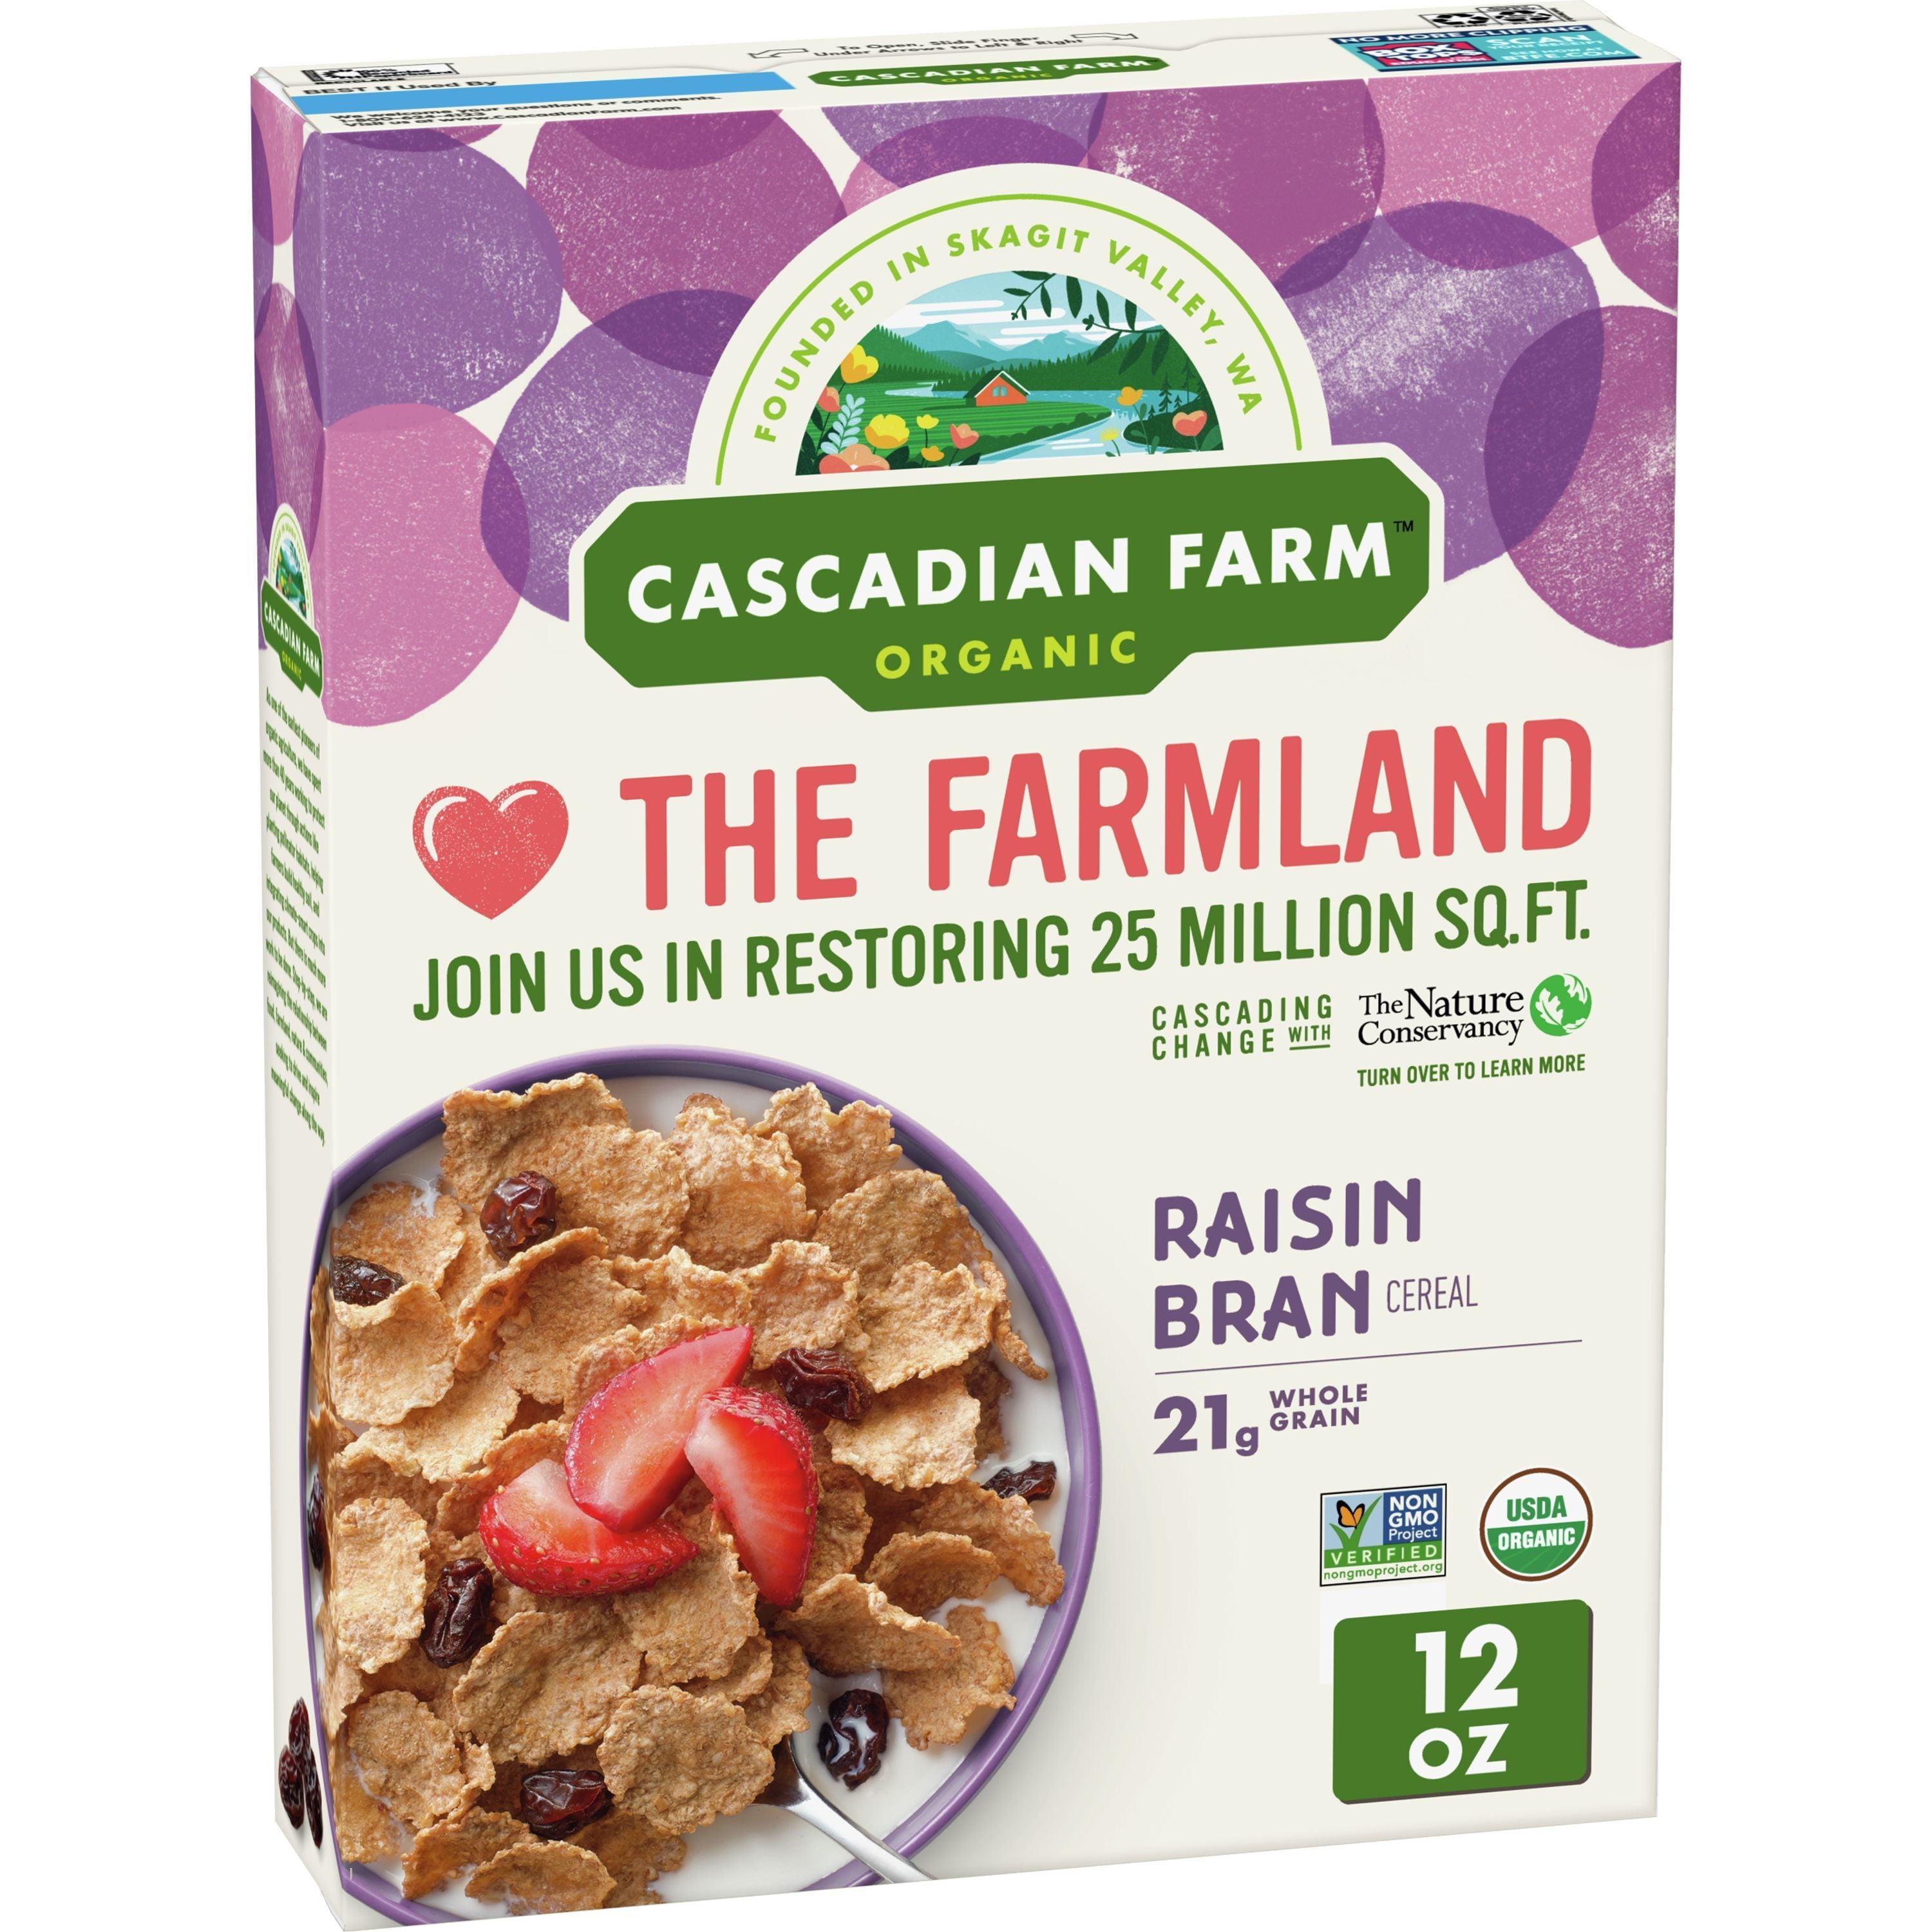 Cascadian Farm Organic The Farmland Raisin Bran Cereal 12 Oz Box